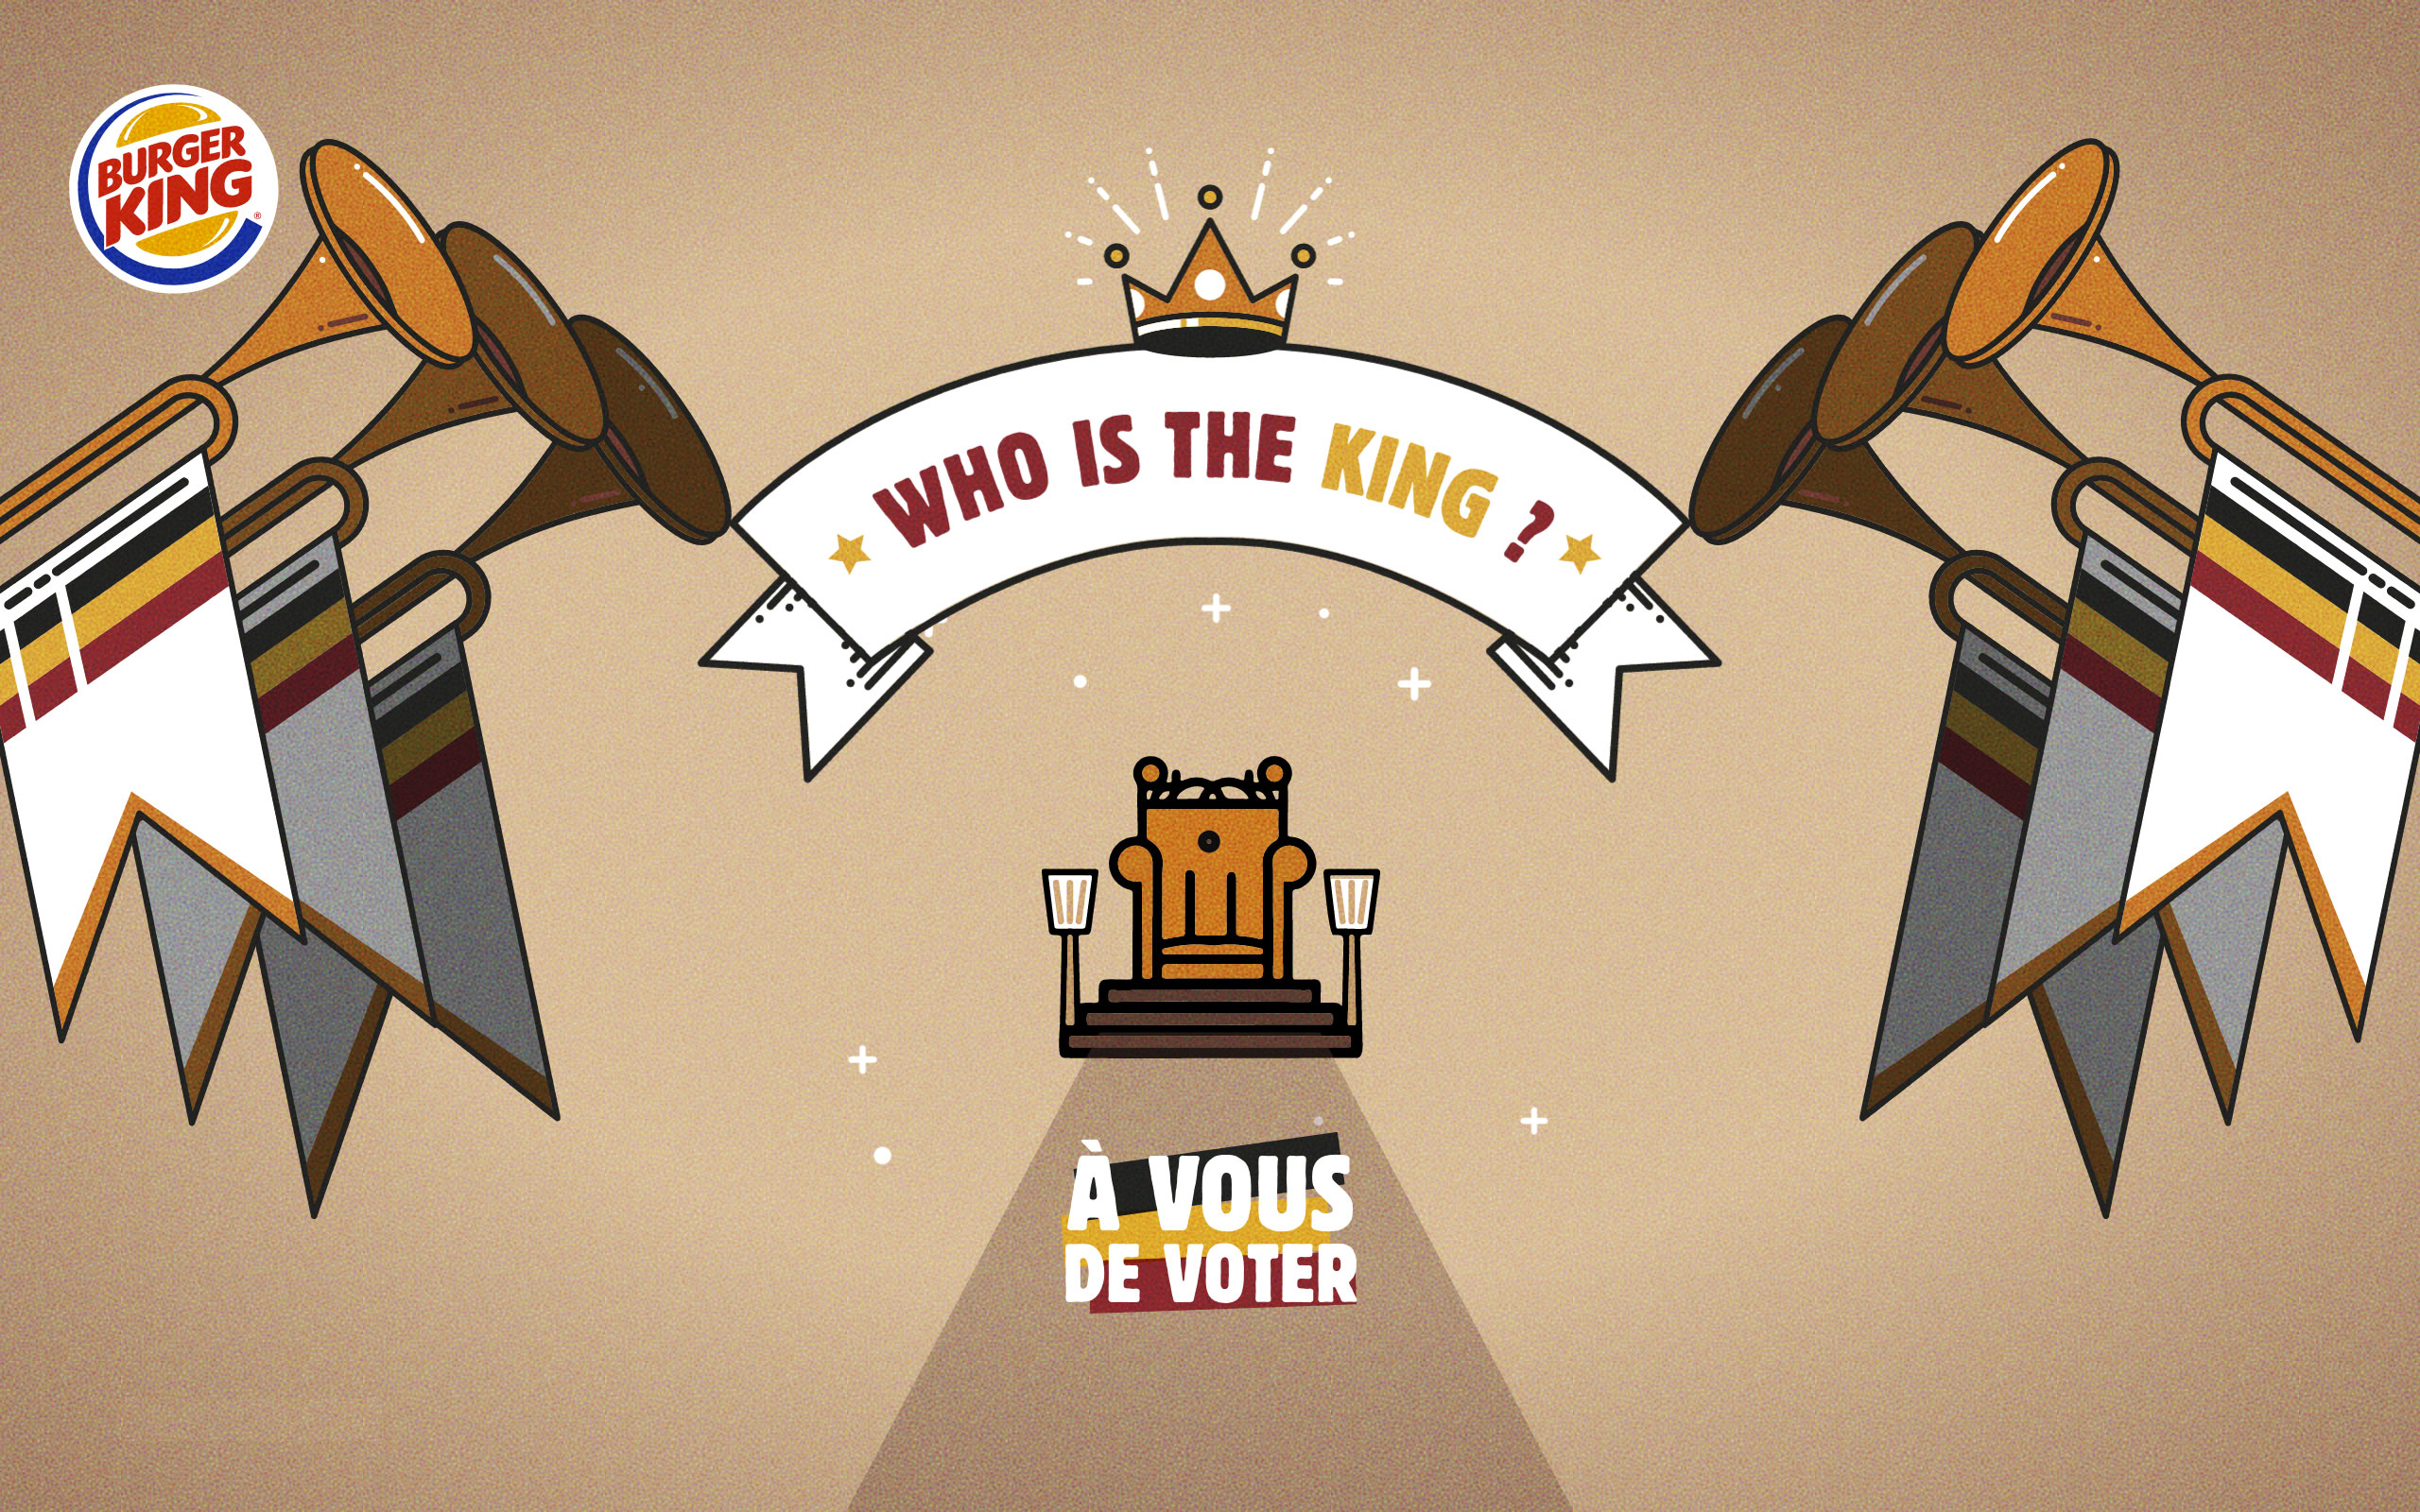 King vote